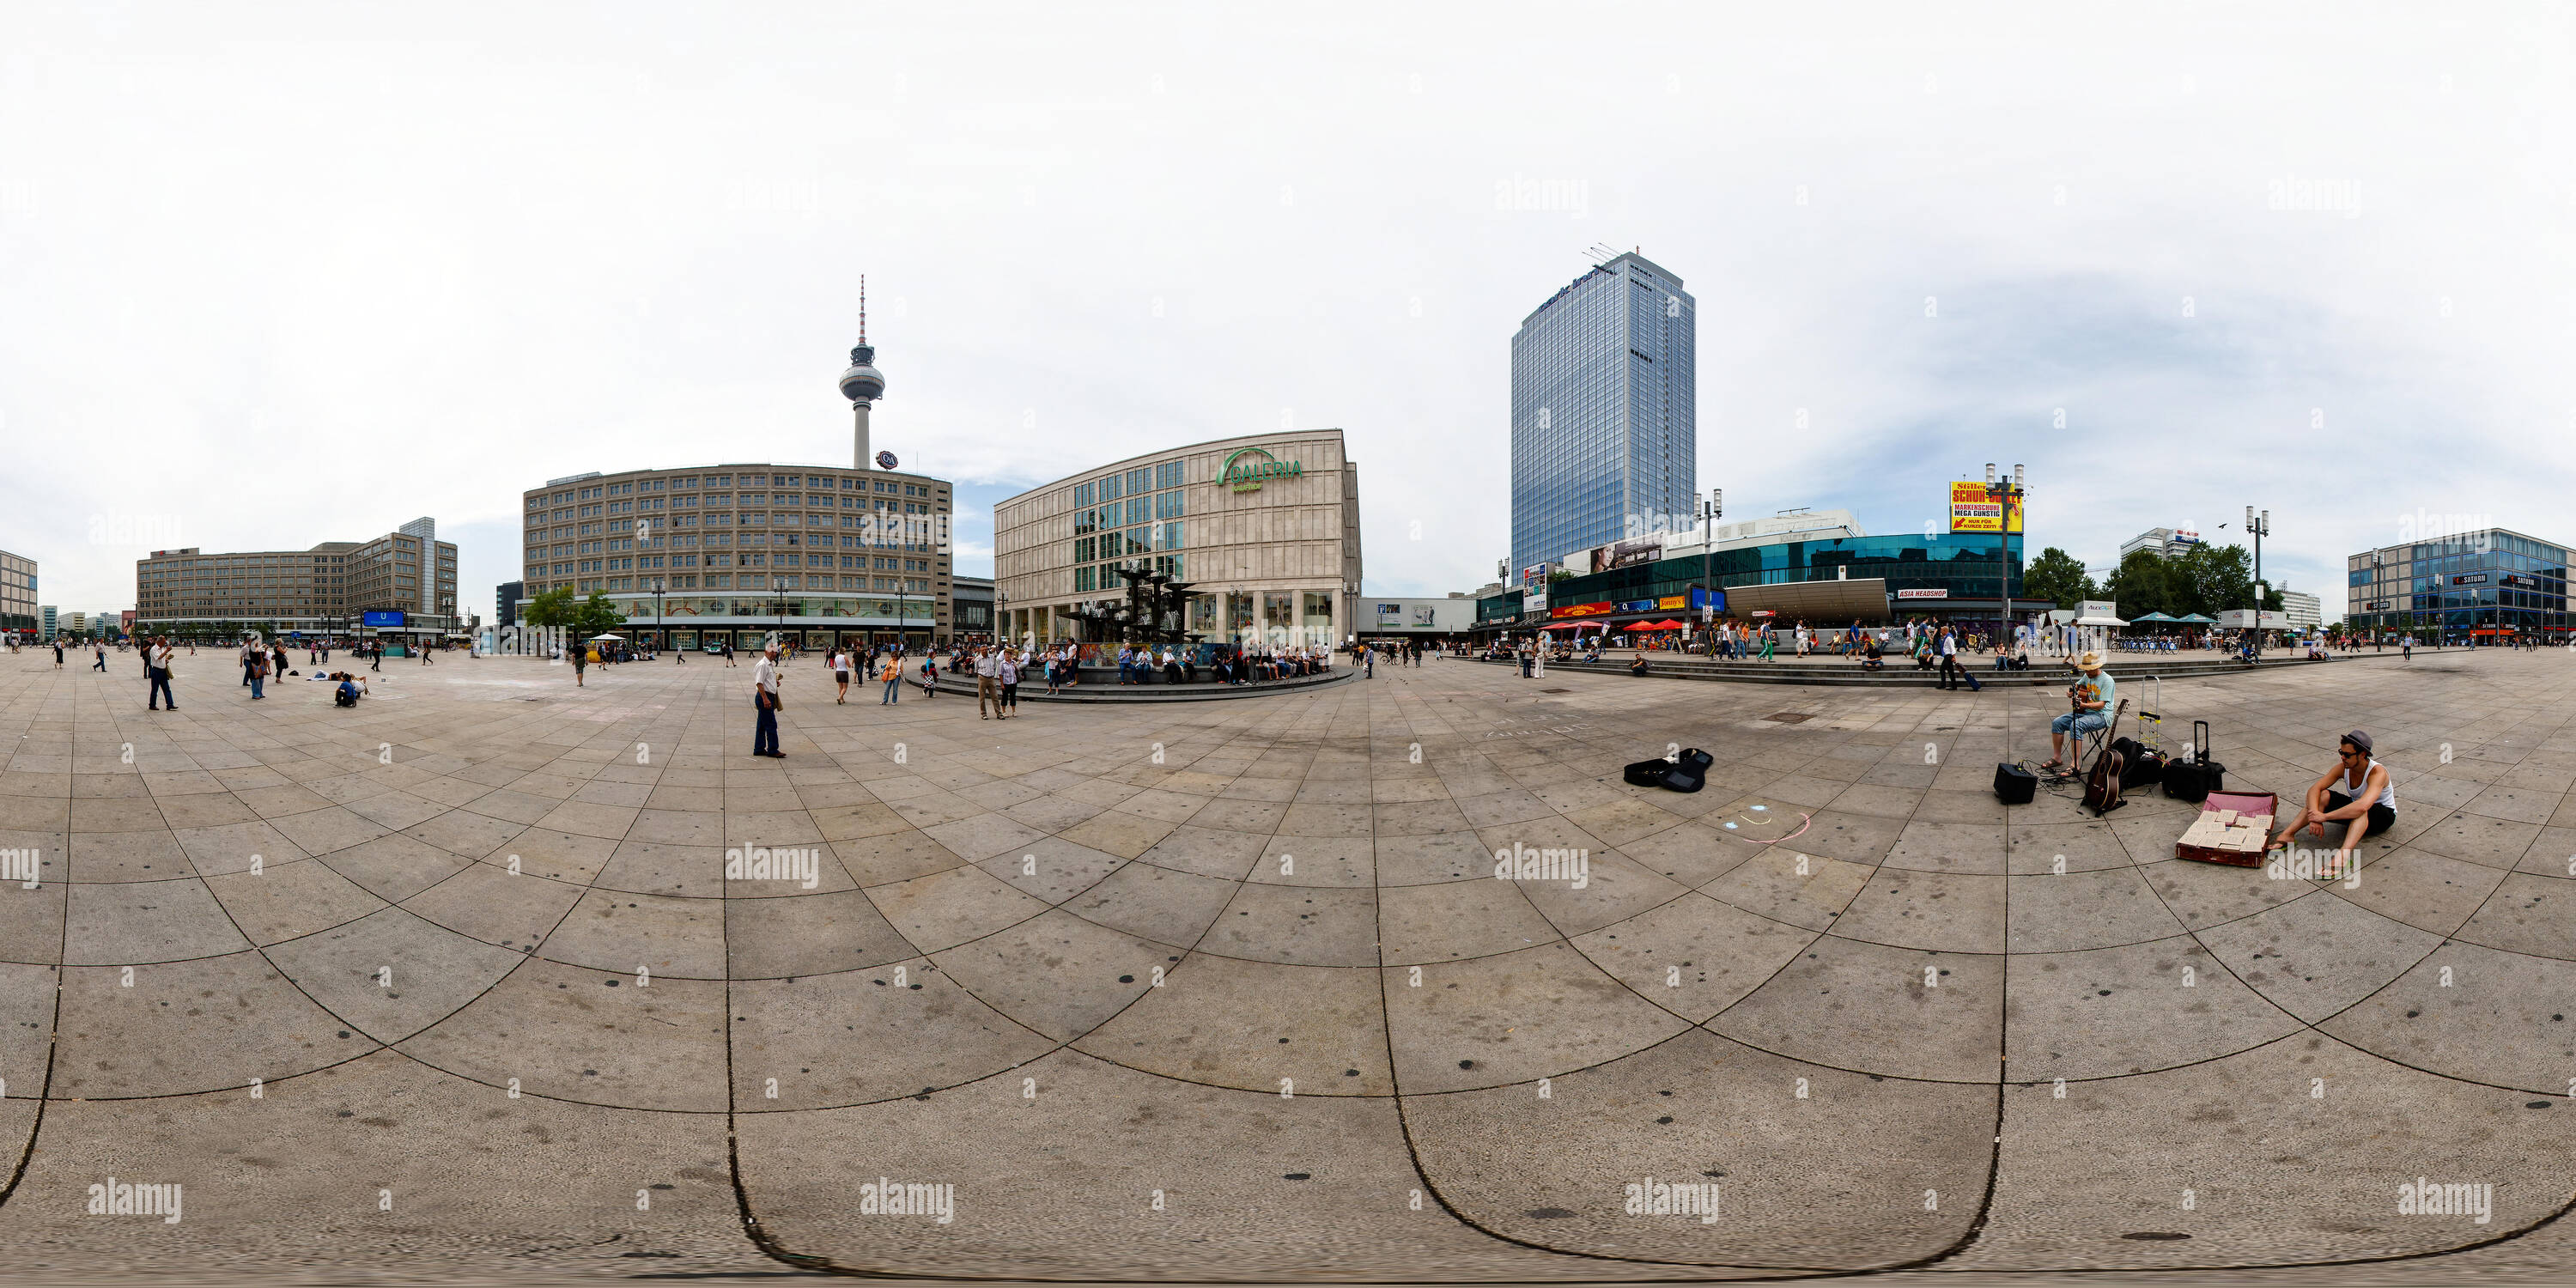 360 degree panoramic view of Berlin - Alexander Platz in a 360 degree spherical panorama